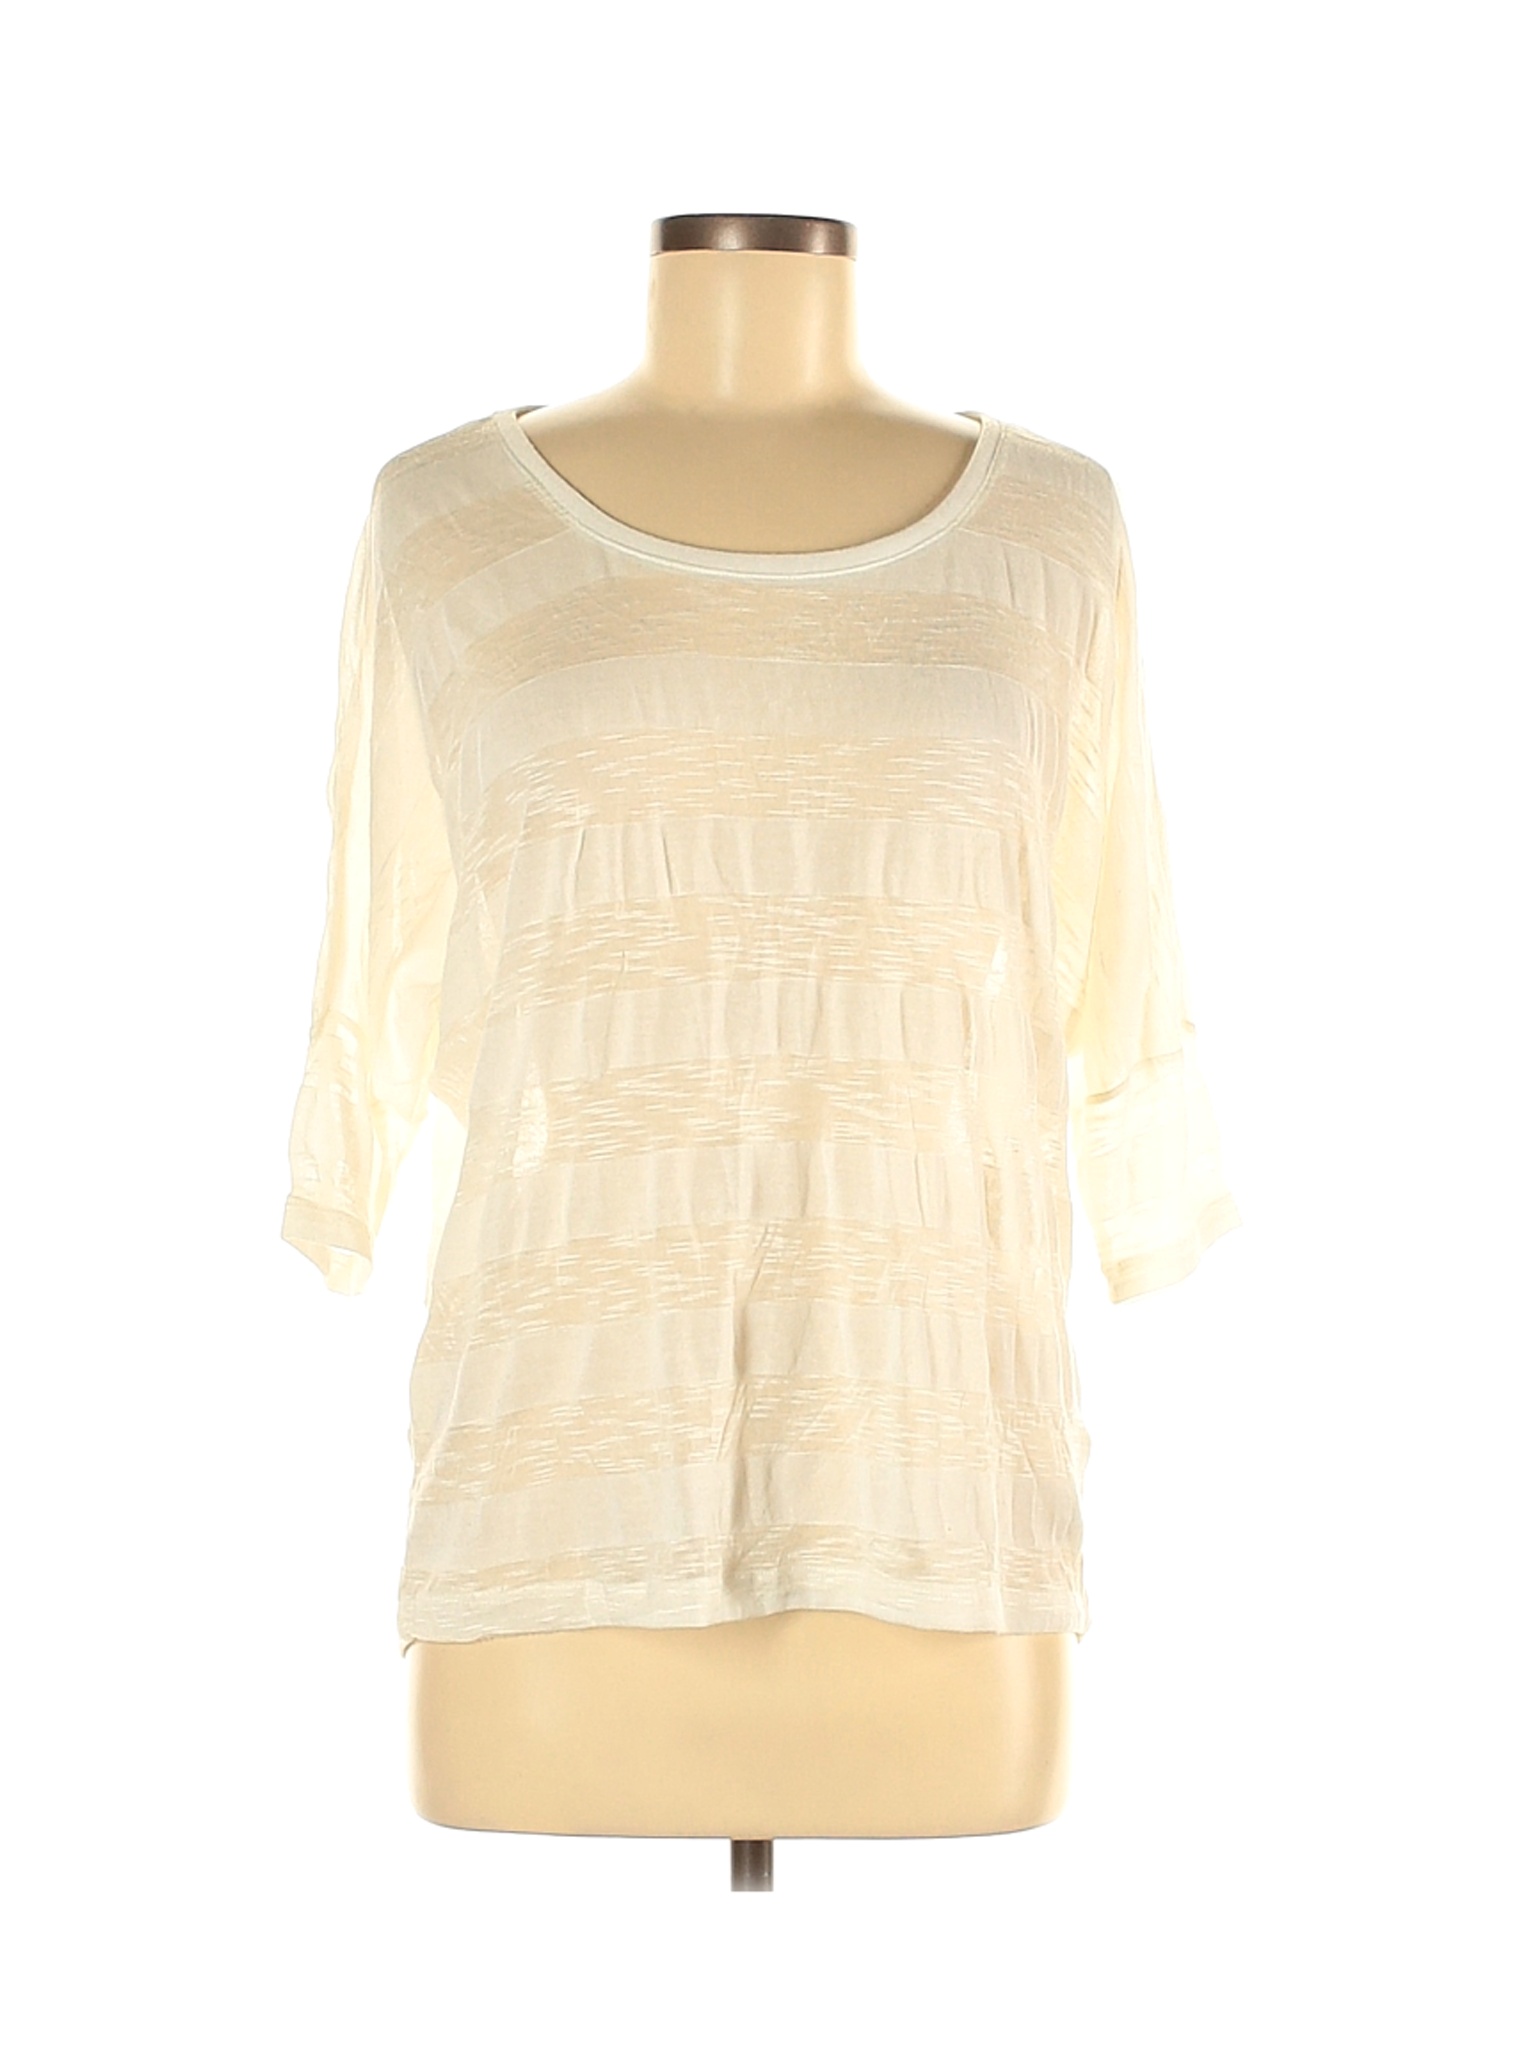 XXI Women Ivory 3/4 Sleeve Top M | eBay